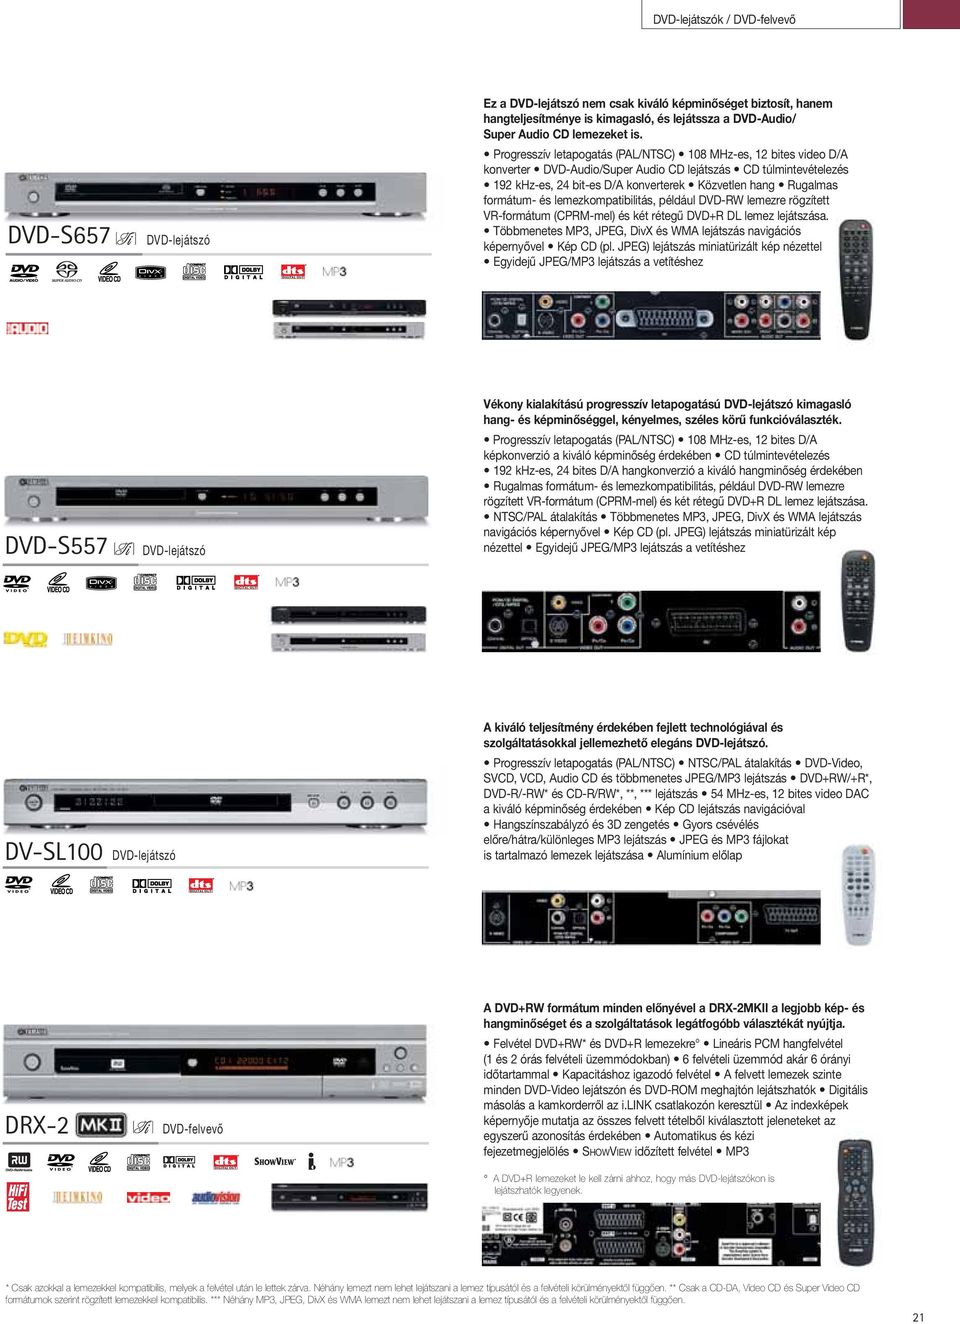 DVD-S657 DVD-S557 DV-SL100 DRX-2. DVD-lejátszó. DVD-lejátszó. DVD-lejátszó.  DVD-felvevő. DVD-lejátszók / DVD-felvevő - PDF Free Download